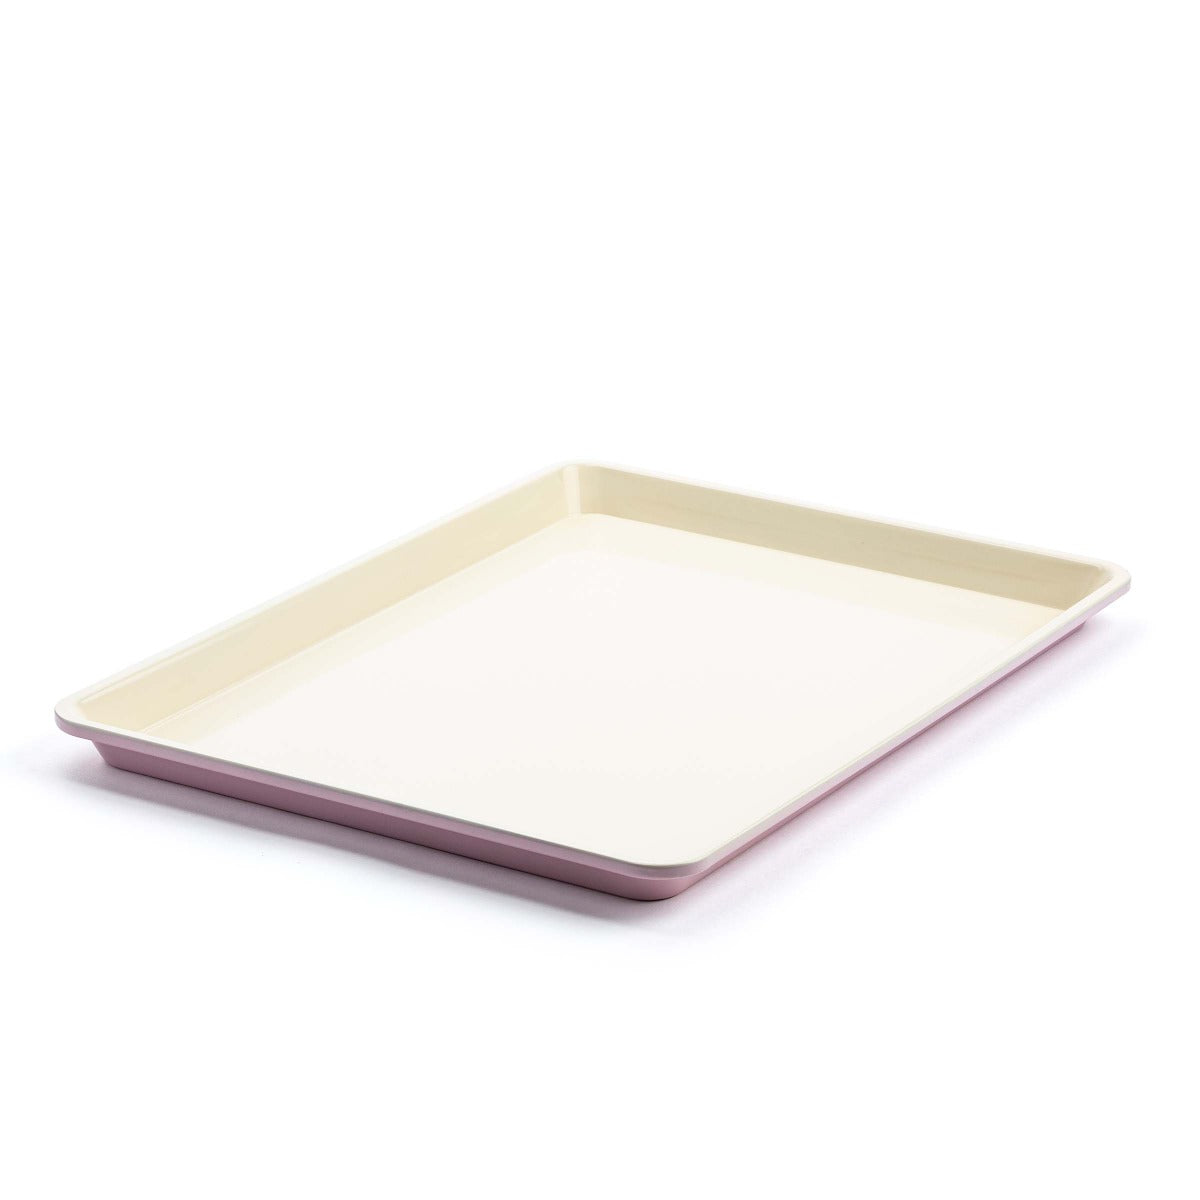 GreenLife Ceramic Nonstick 18 x 13 Cookie Sheet, Pink